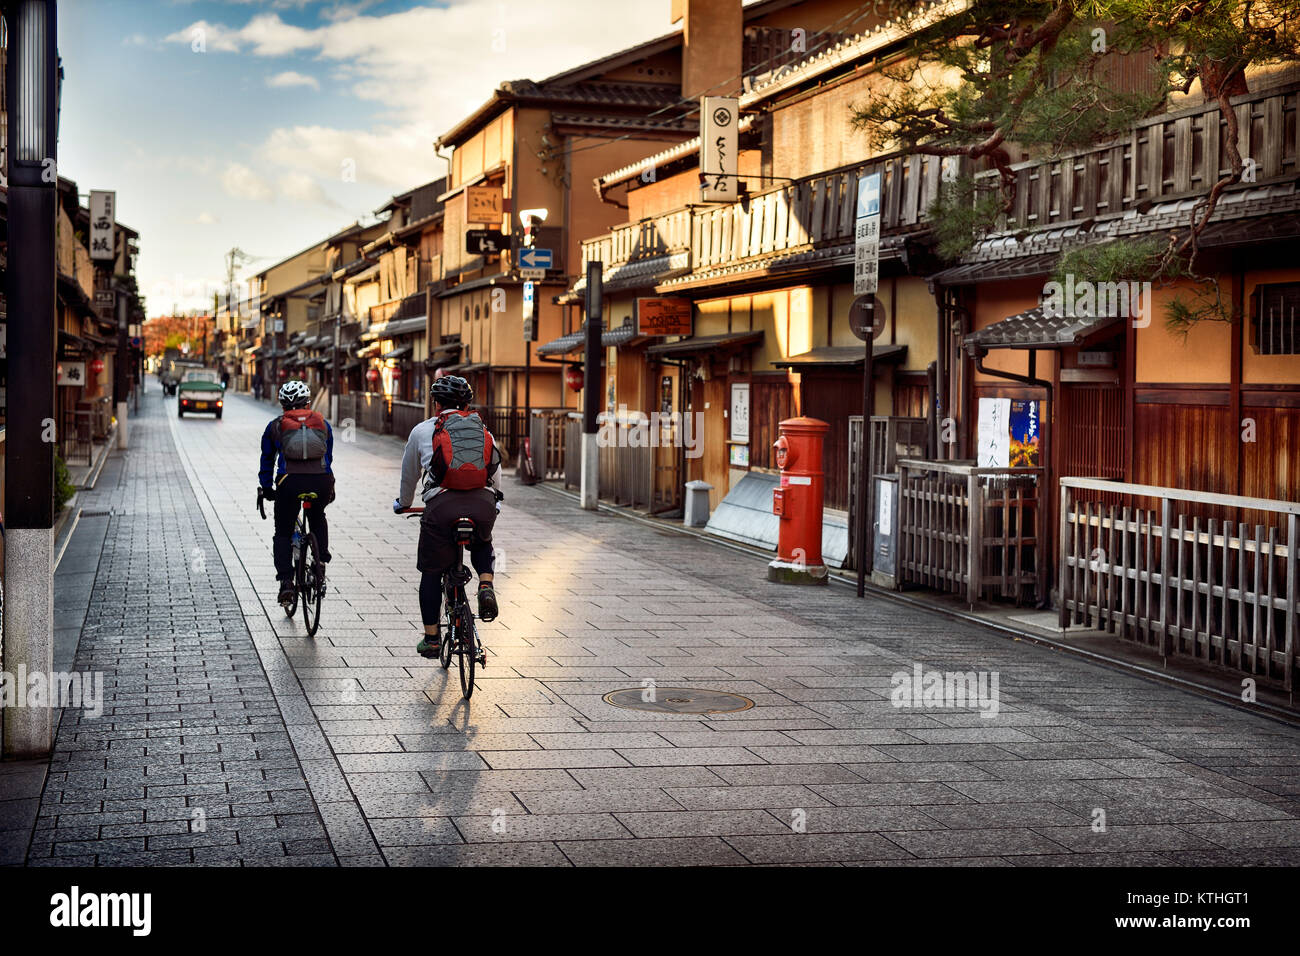 Lizenz und Drucke im MaximImages.com - Historic Streets of Gion, Kyoto, Japan Reise Stock Foto Stockfoto